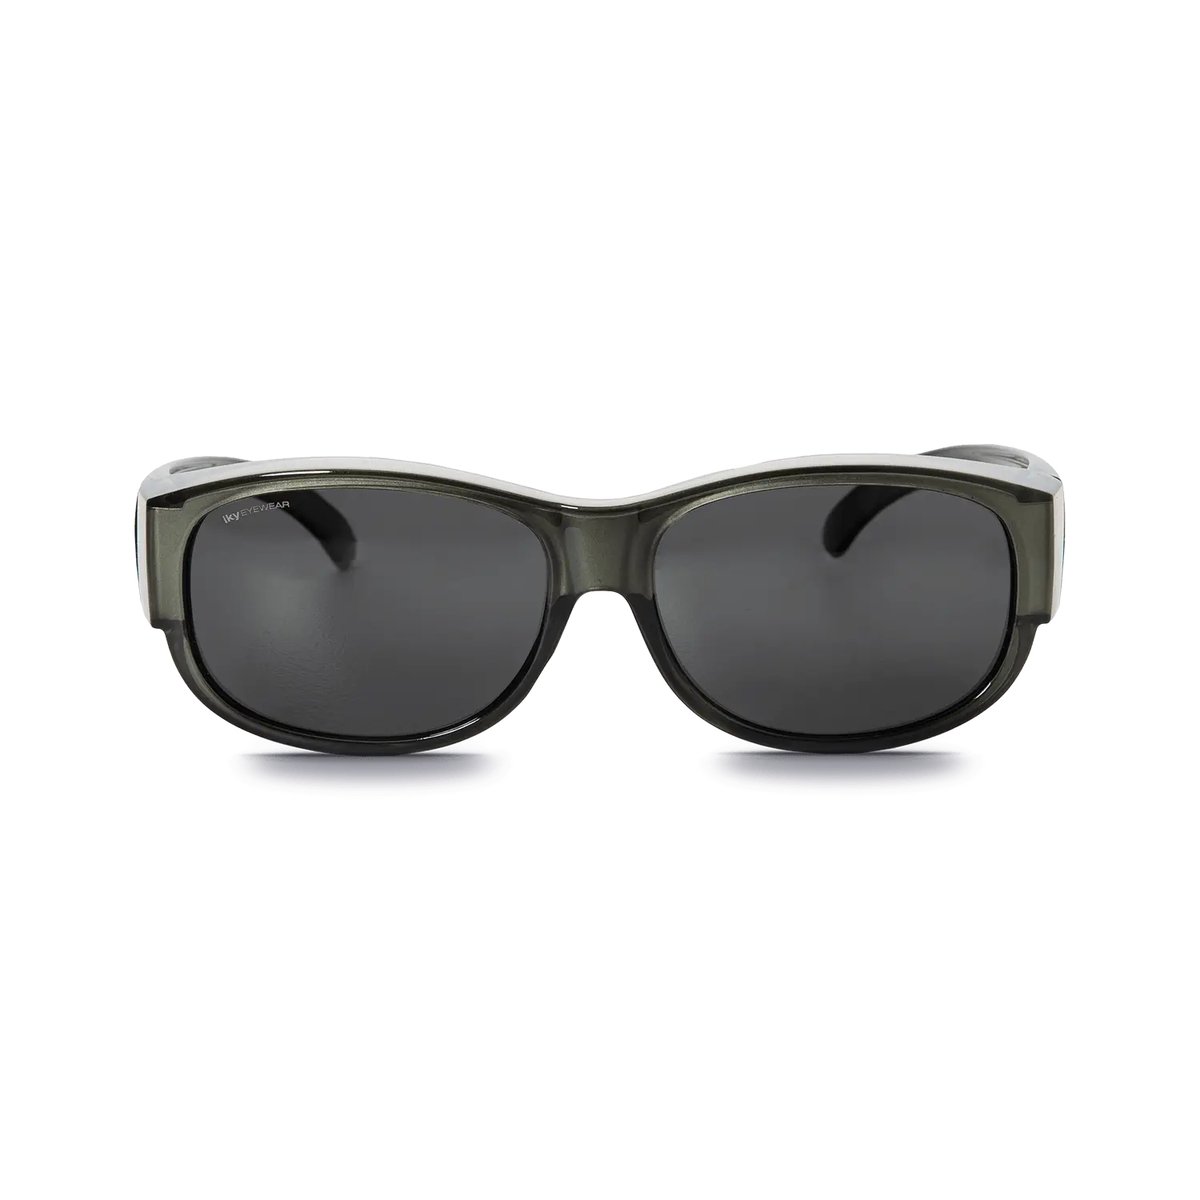 IKY EYEWEAR overzet zonnebril OB-1001D1-grijs-metallic